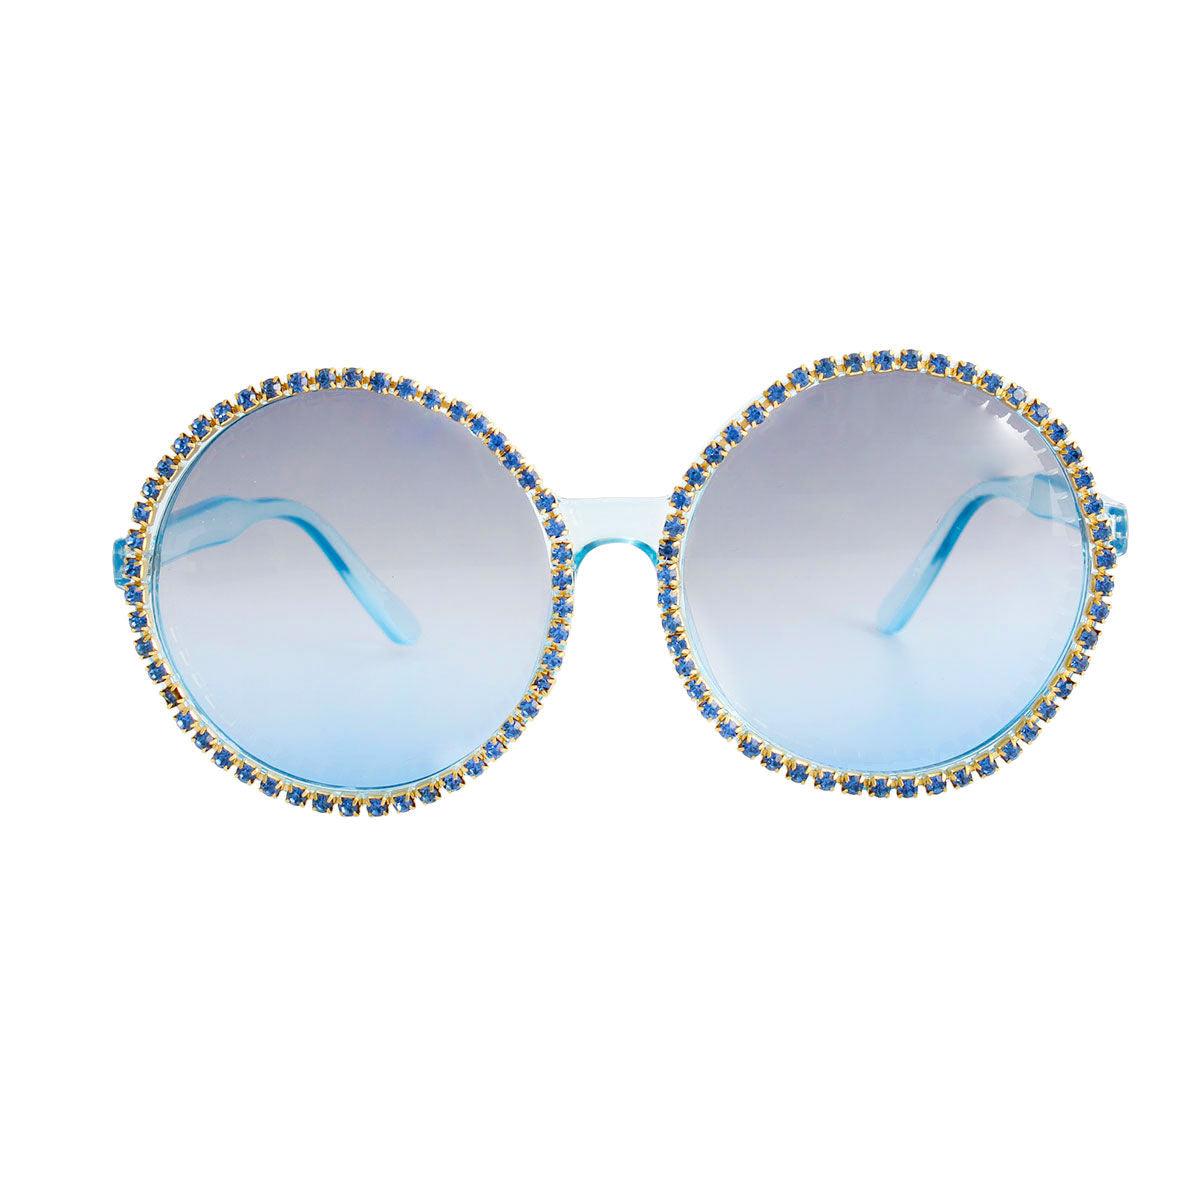 Blue Round Sunglasses for Women - Mega Stylish Must-Haves